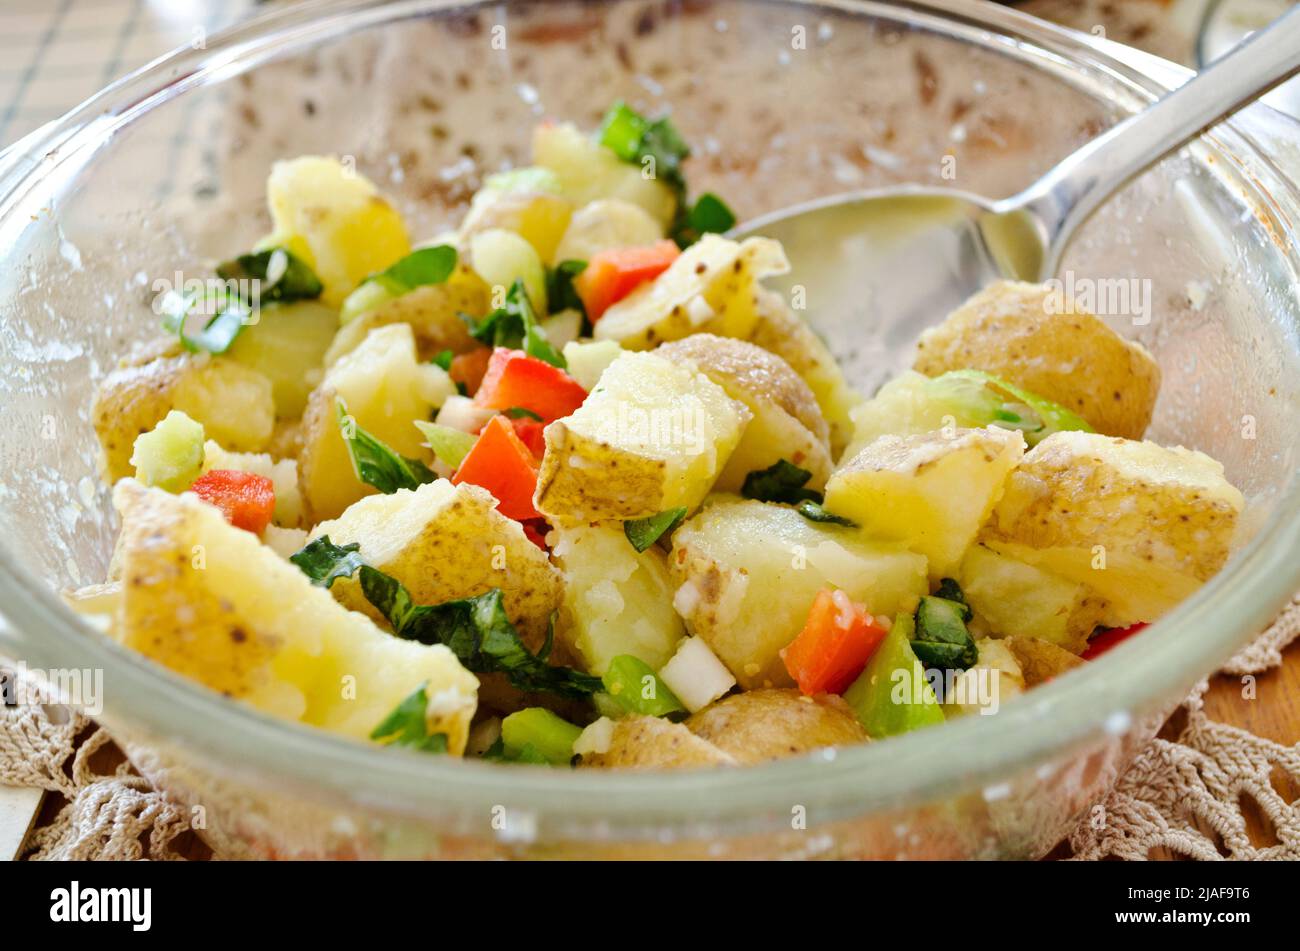 Homemade potato salad with fresh basil and red bell peppers. Vegan potato salad with a vinaigrette. Stock Photo